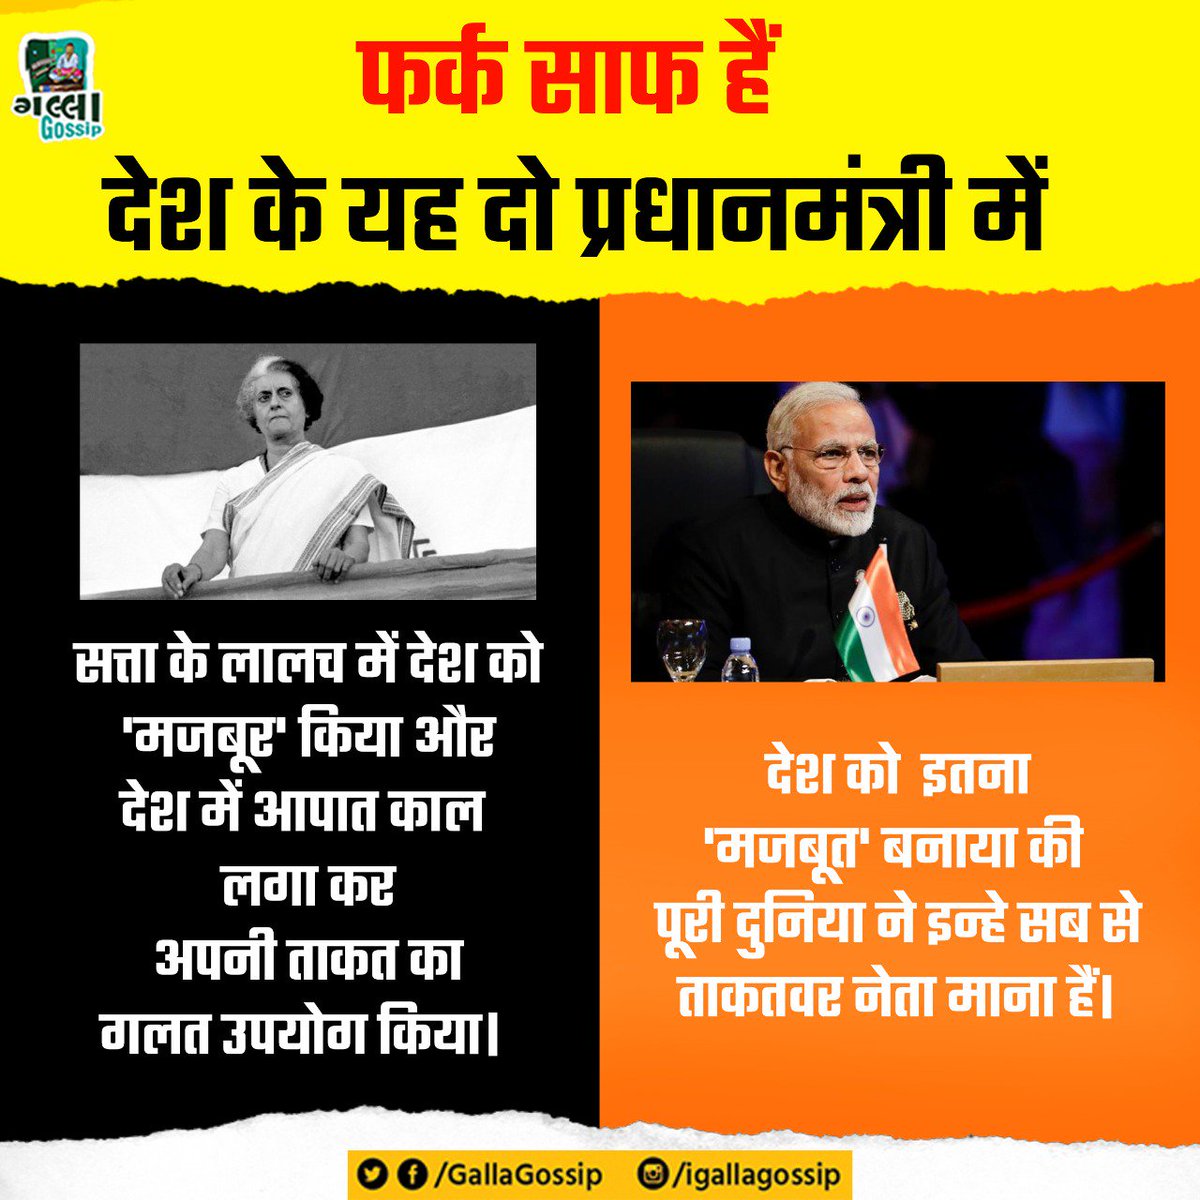 फर्क साफ हैं 
देश के यह दो प्रधानमंत्री में
#NamoForNewIndia 
 #ModiHaiToMumkinHai  
#bharatkagarvmodi  
#DeshKaGauravModi
#MyLeaderRahulGandhi
#WednesdayWisdom